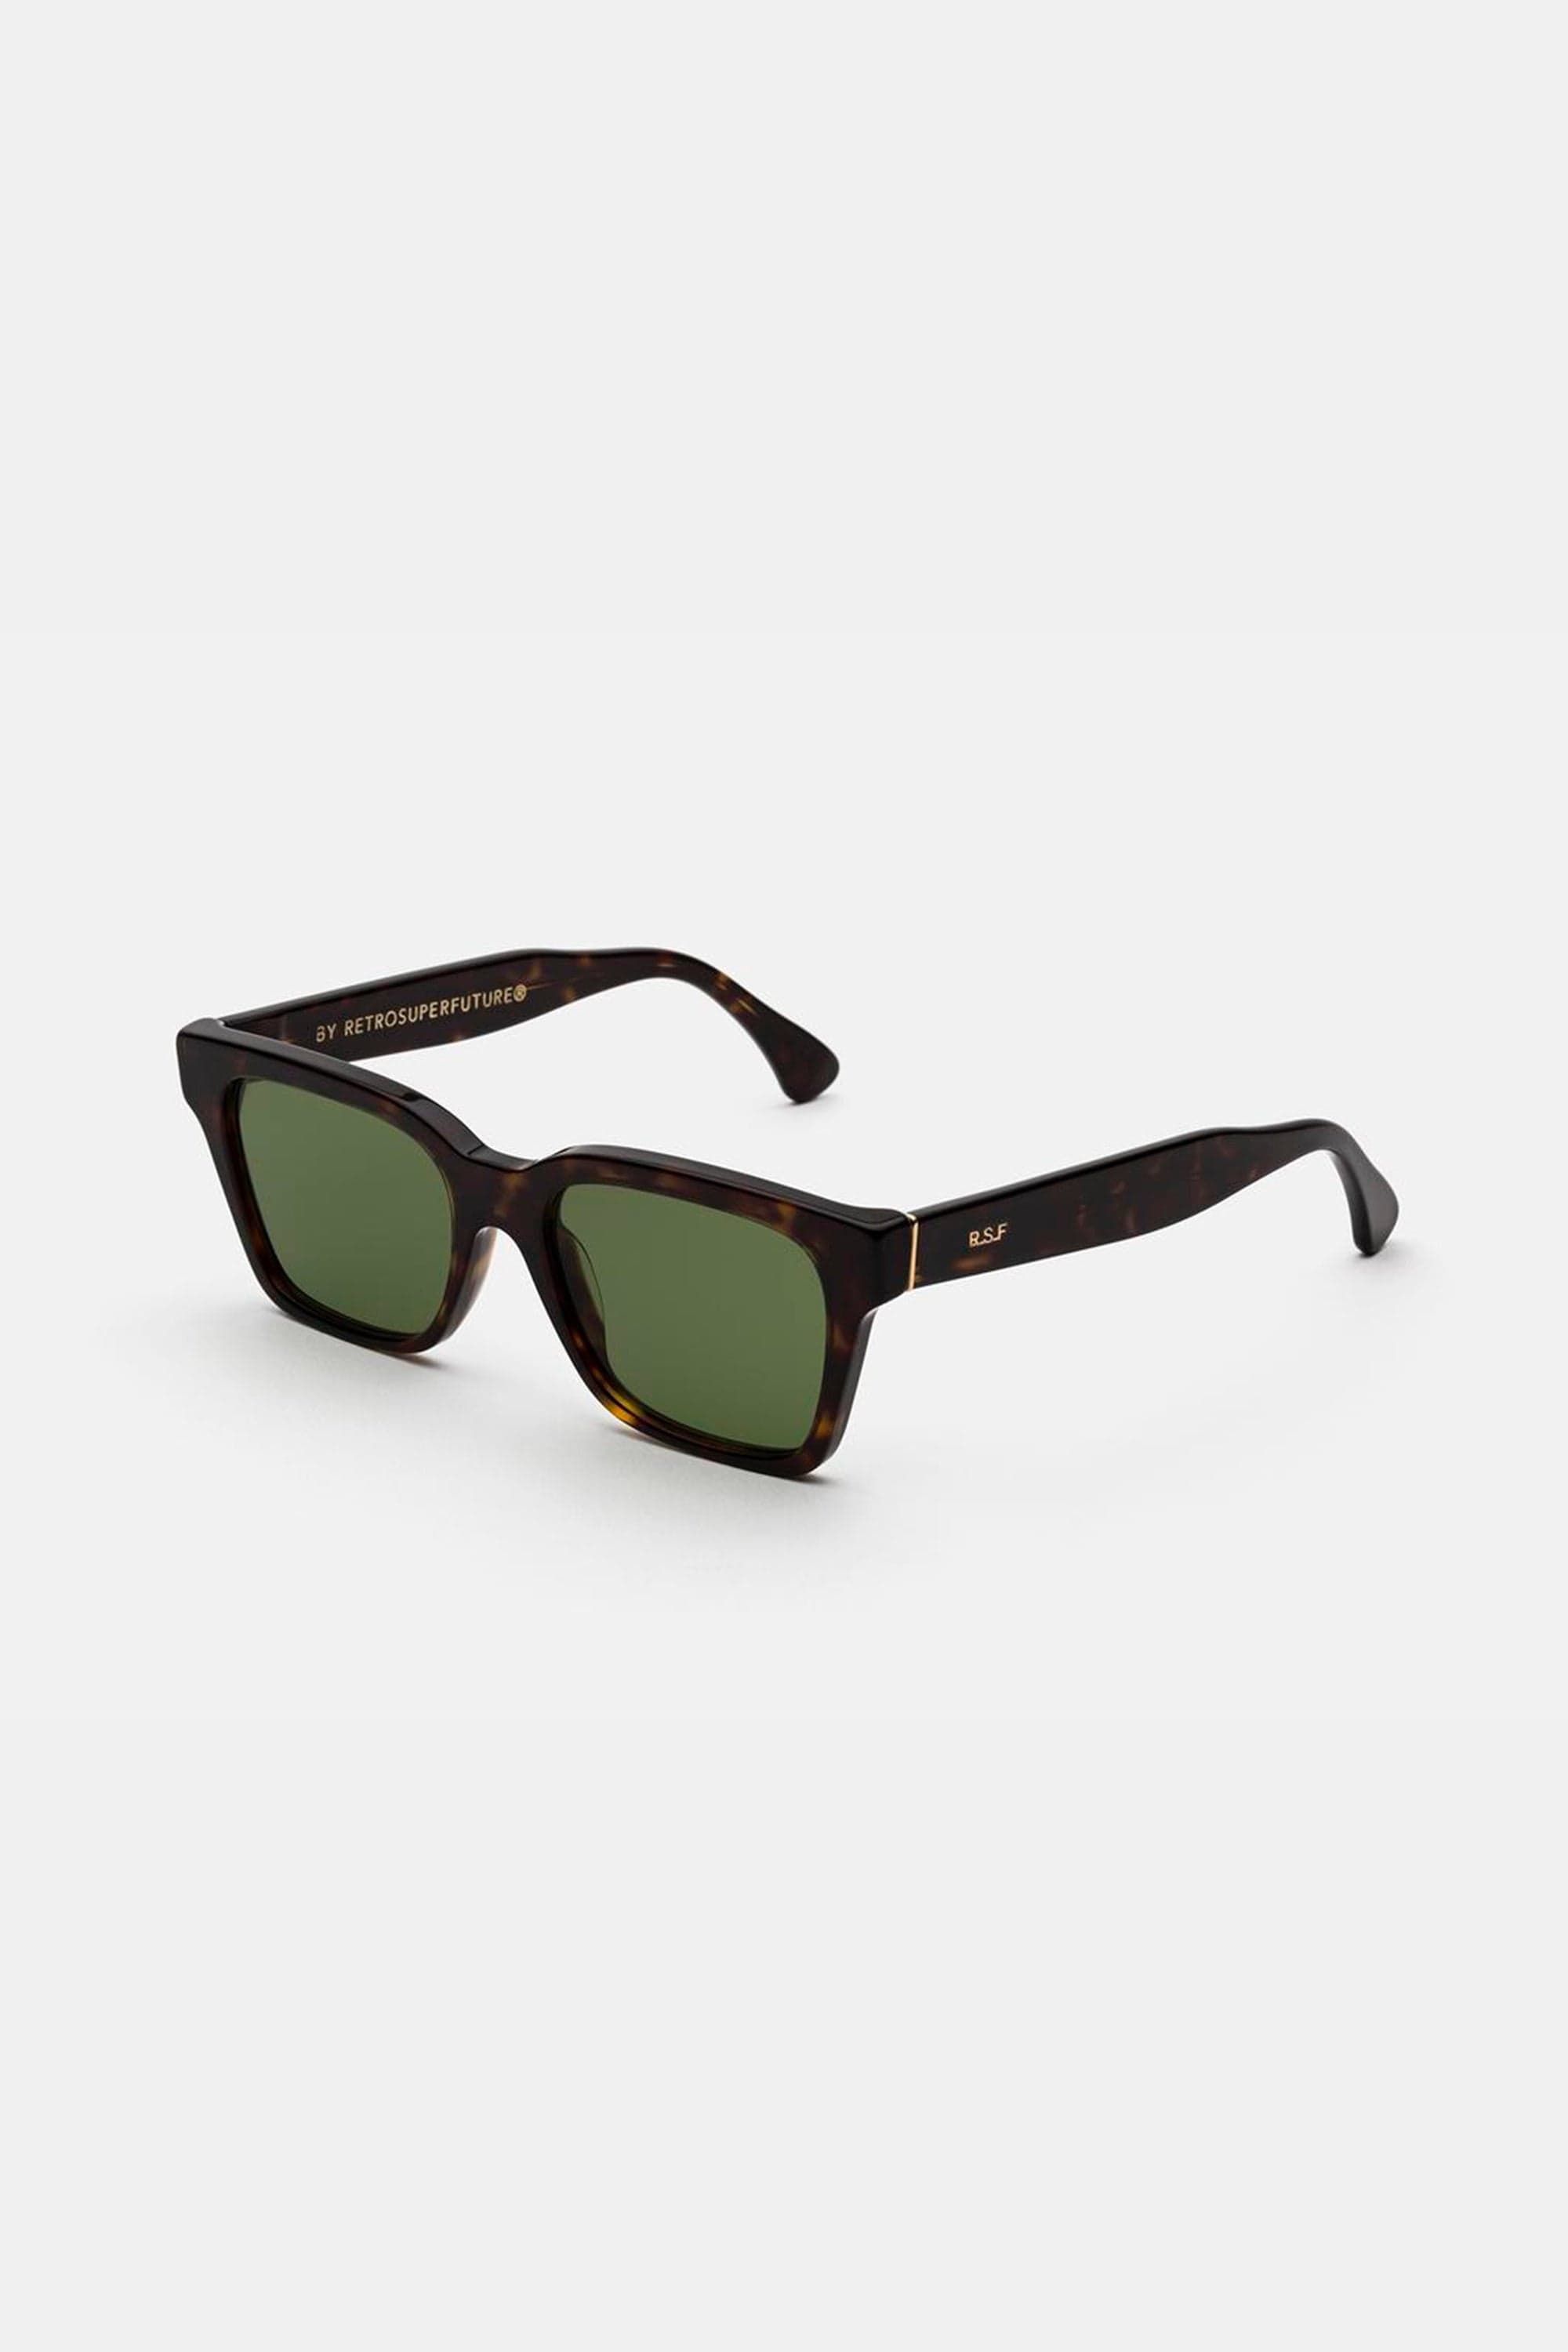 Retrosuperfuture UNICO 3627 green Eyewear – Club sunglasses